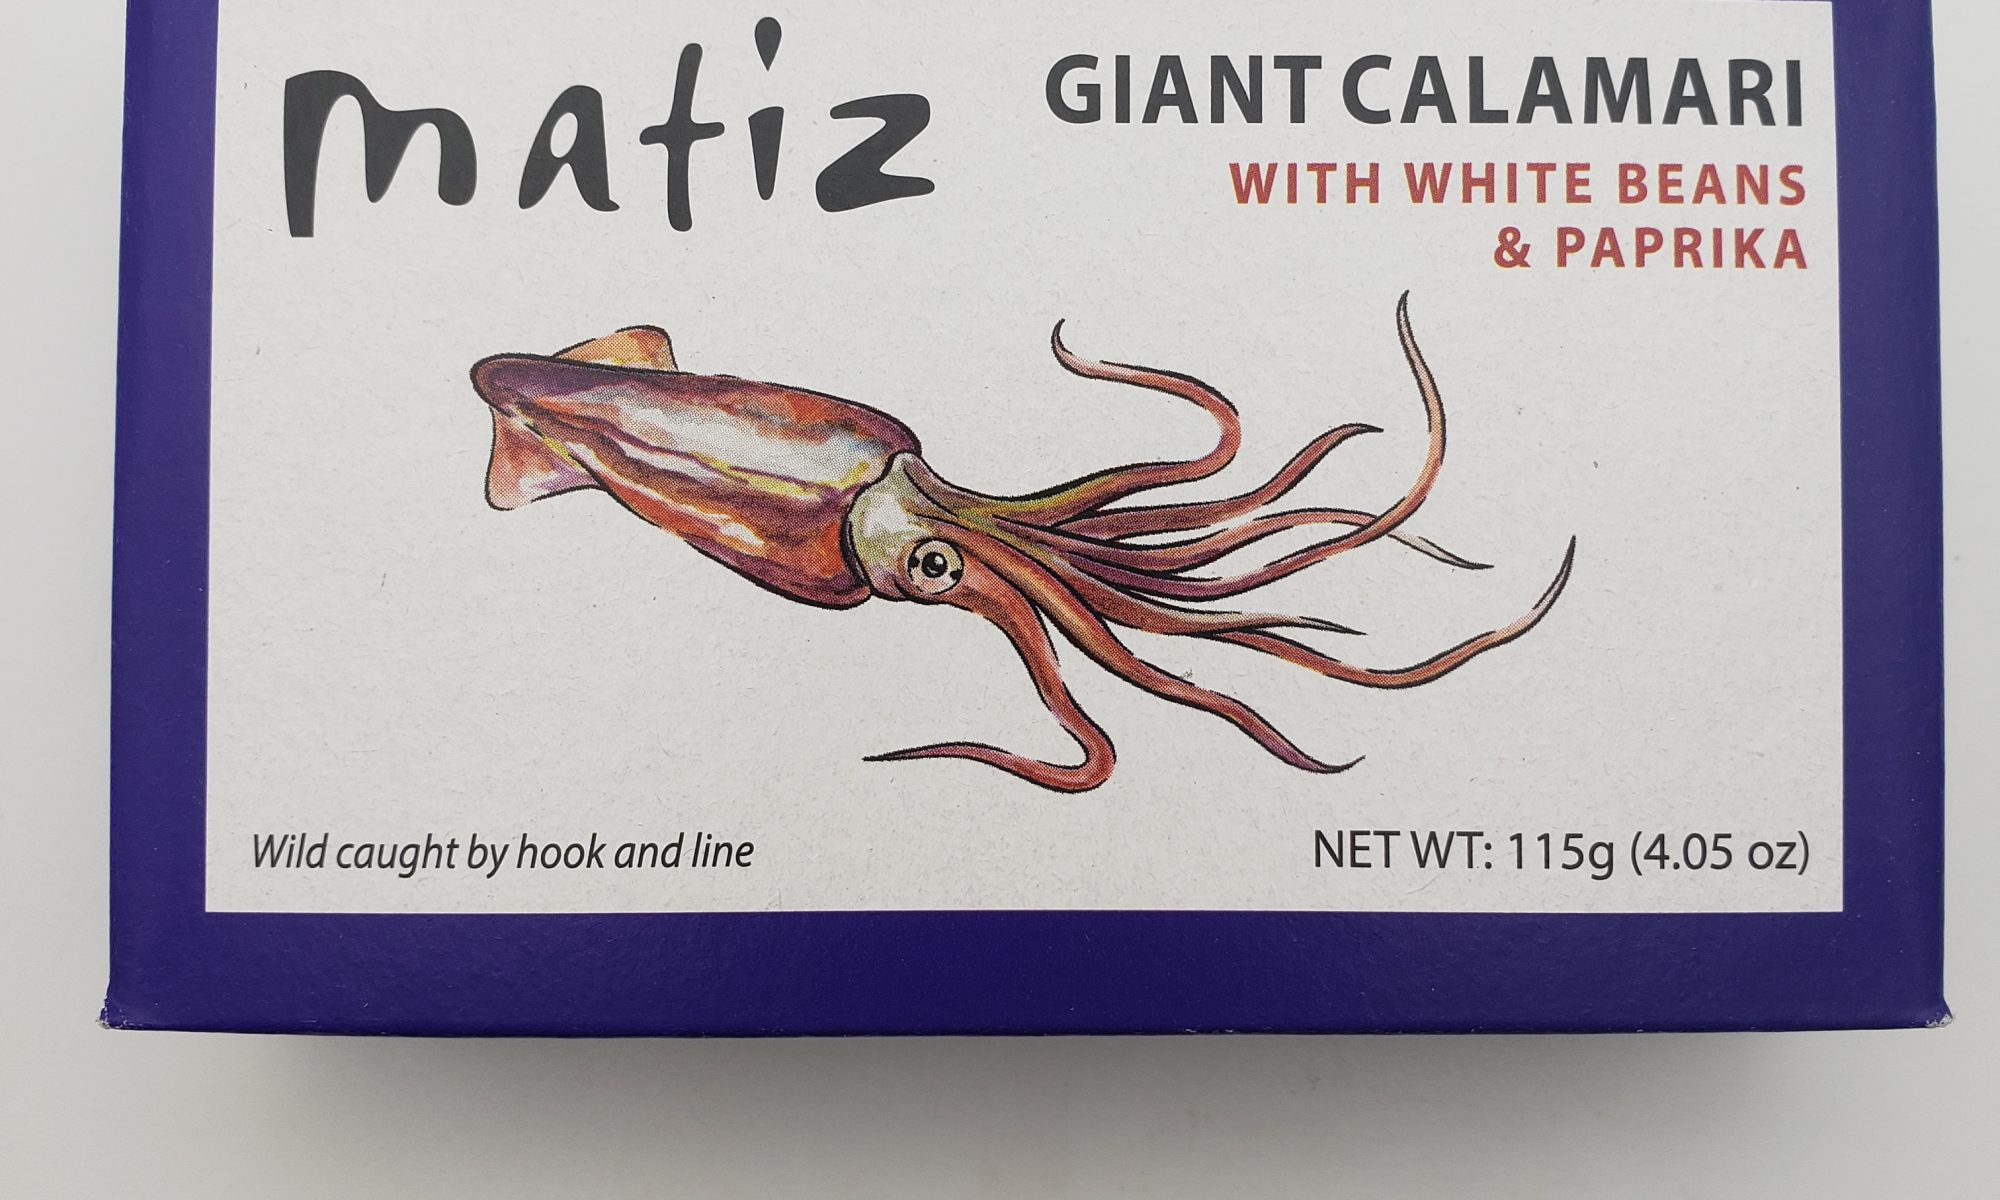 Image of Matiz giant calamari with white beans and pakrika